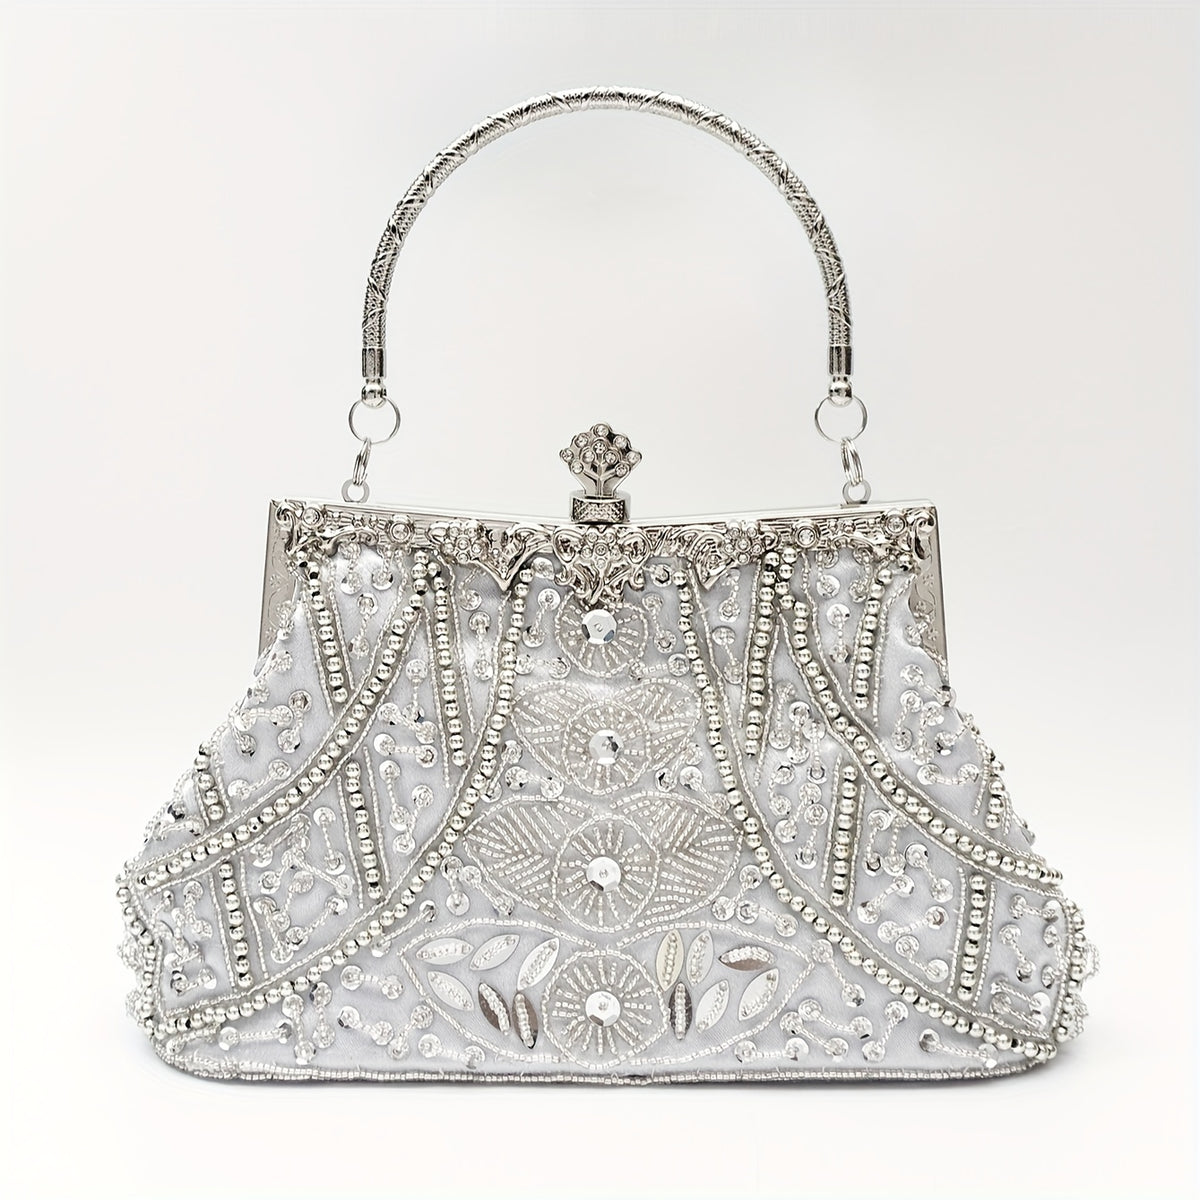 Vintage Beaded Sequin Evening Bag, Portable Handle Exquisite Clasp Clutch Handbag, Detachable Chain Strap Elegant Shoulder Bag